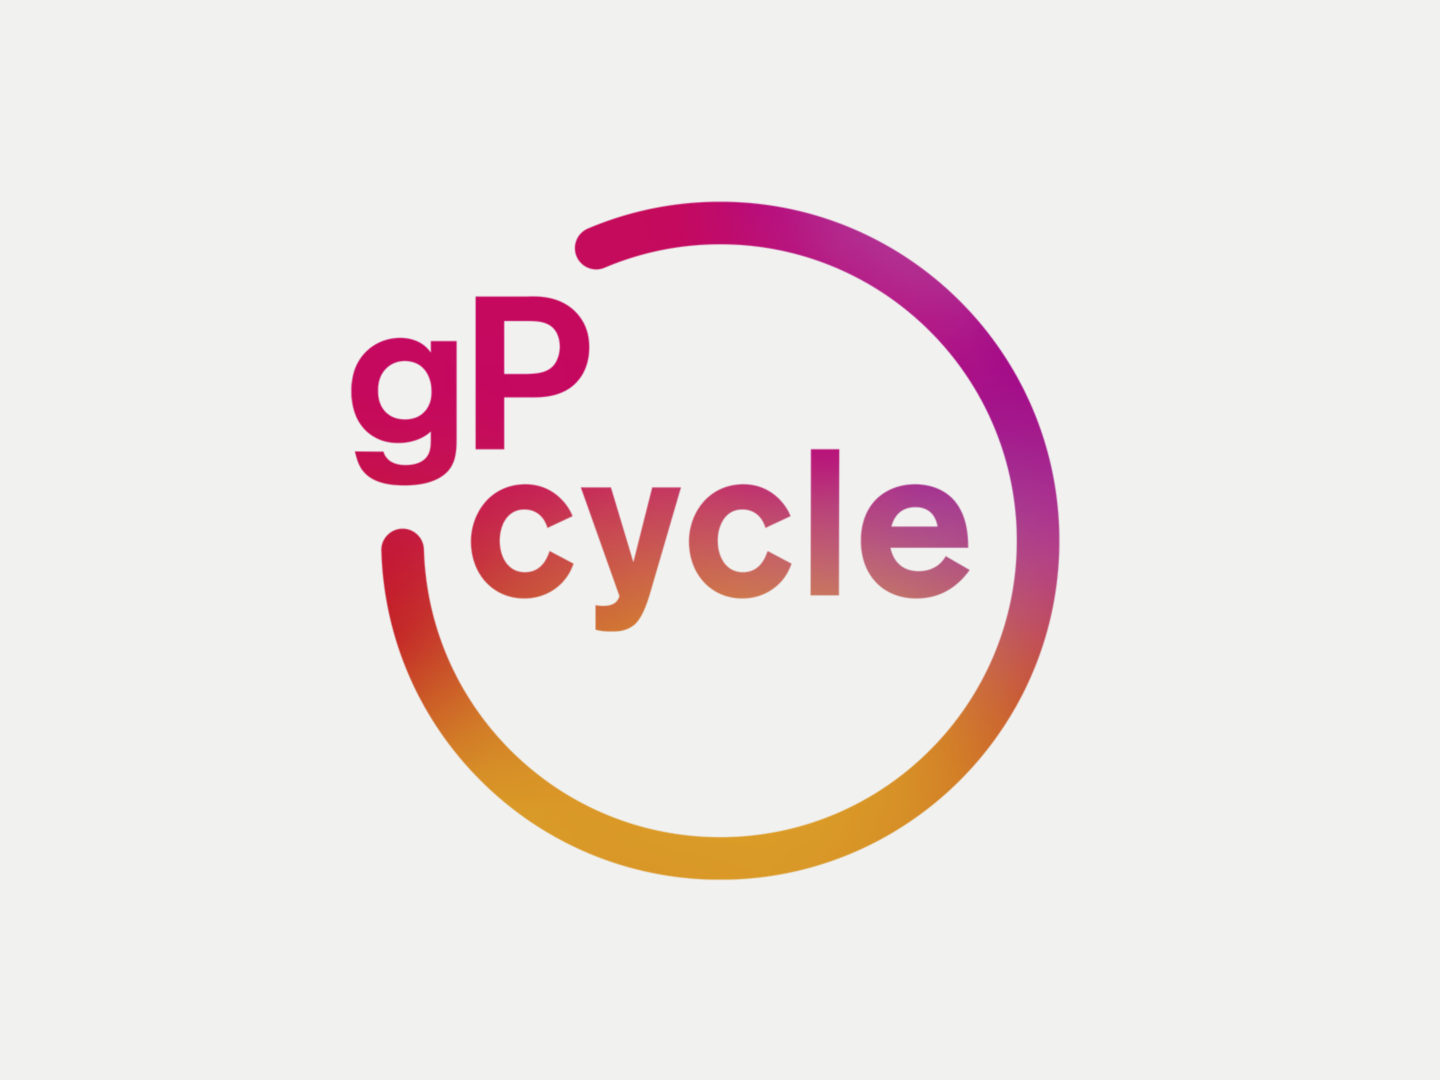 gP cycle